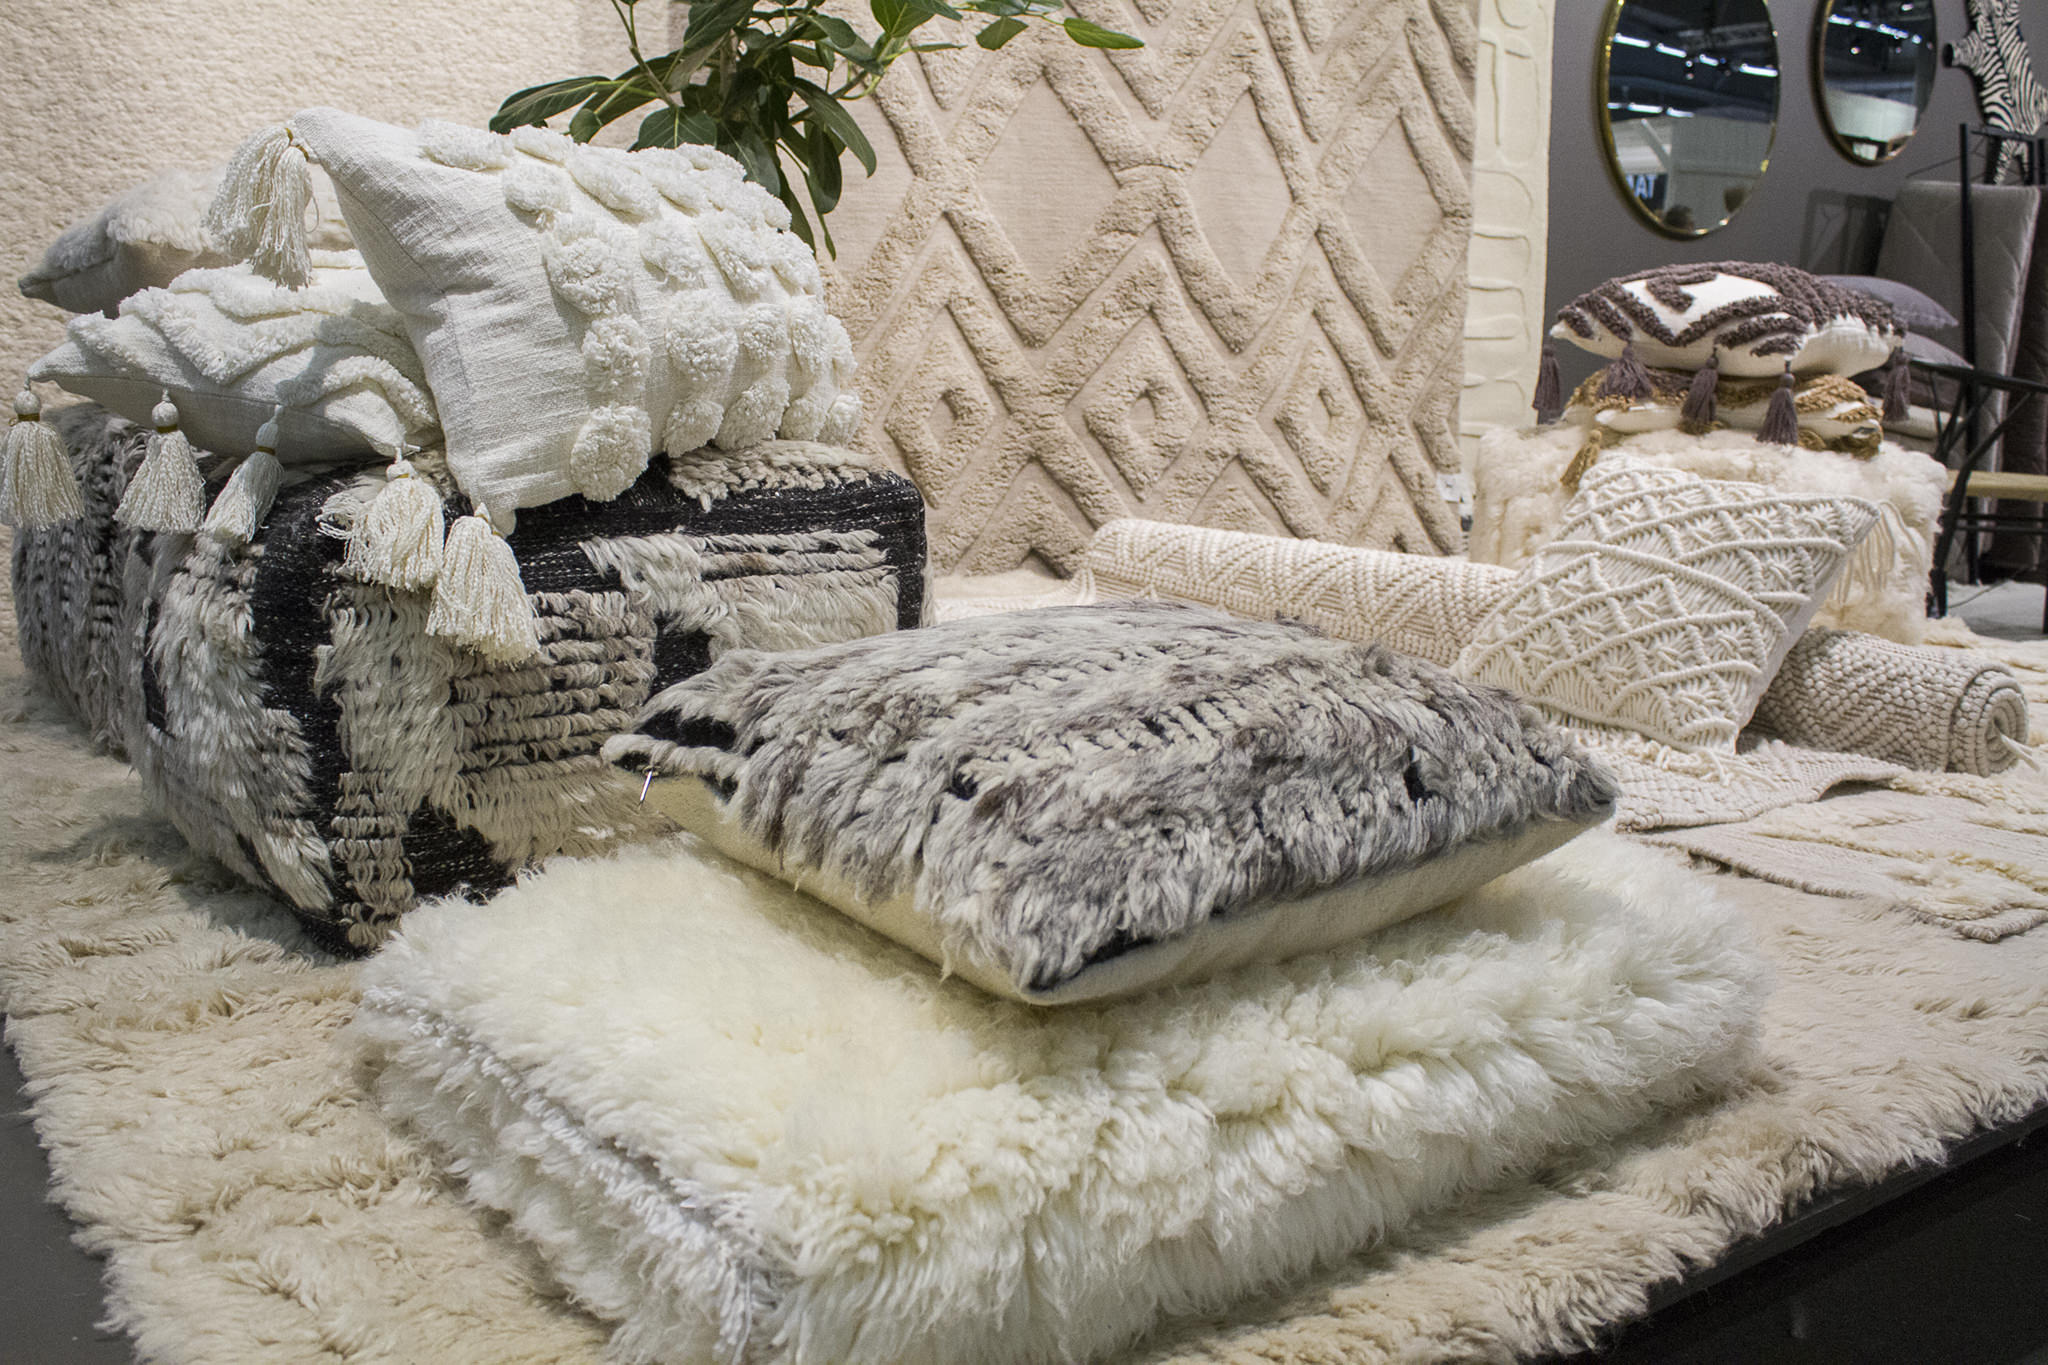 Formex interior scandinavian design fair stockholm sweden cushions blanket carpet